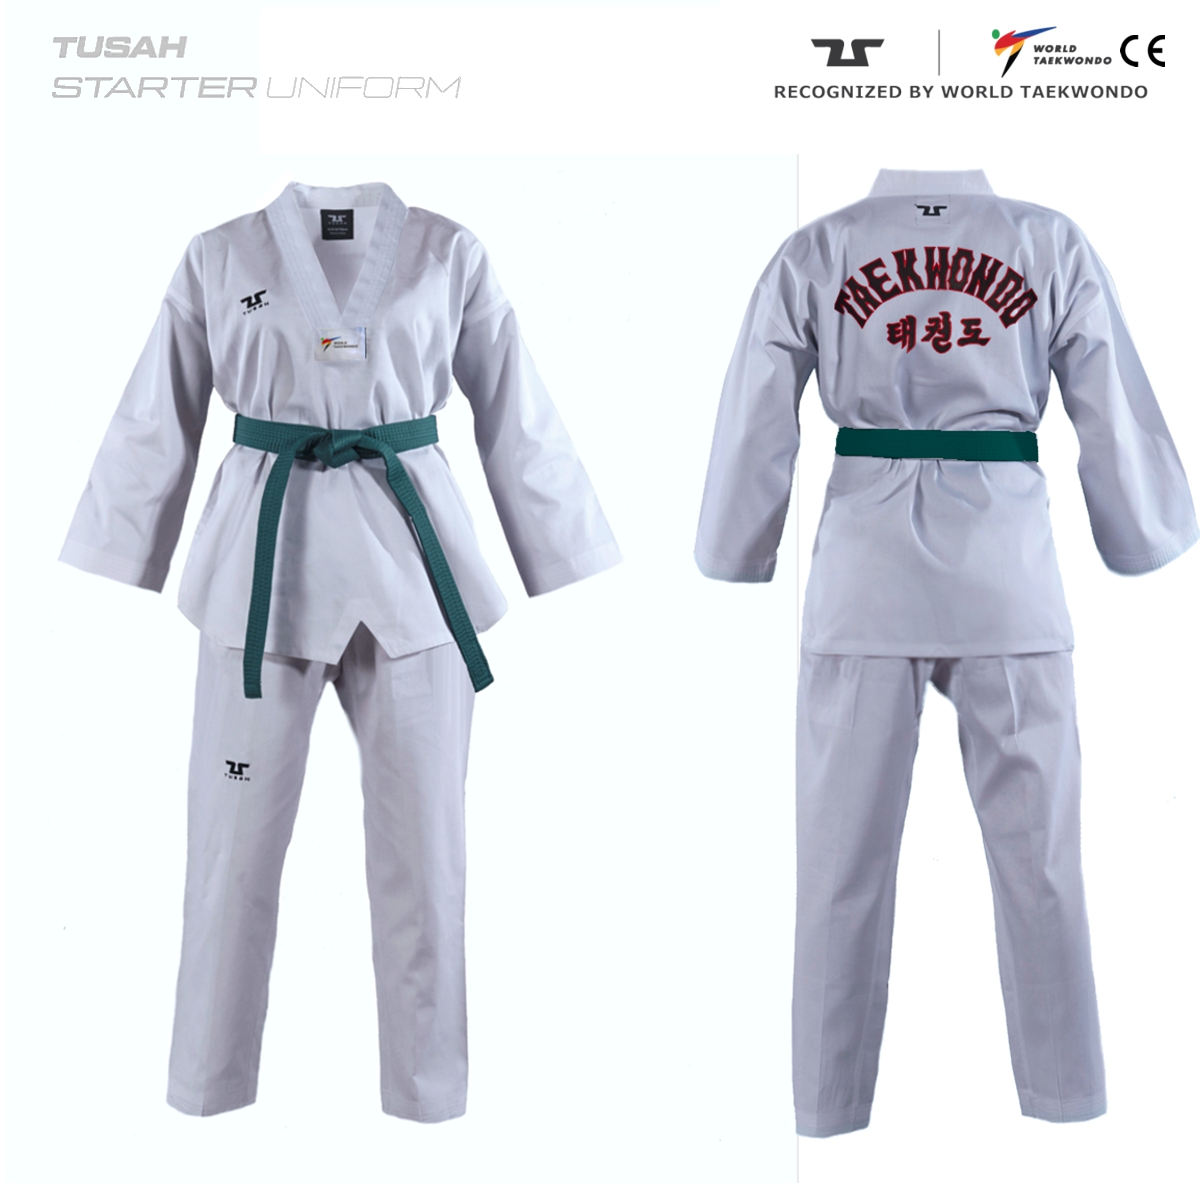 Tusah Traje de Taekwondo Starter   TKD Dobok   Parte Superior con inscripción Taekwondo   Deportes de Lucha Traje por el World Vendaje Taekwondo Aprobado 